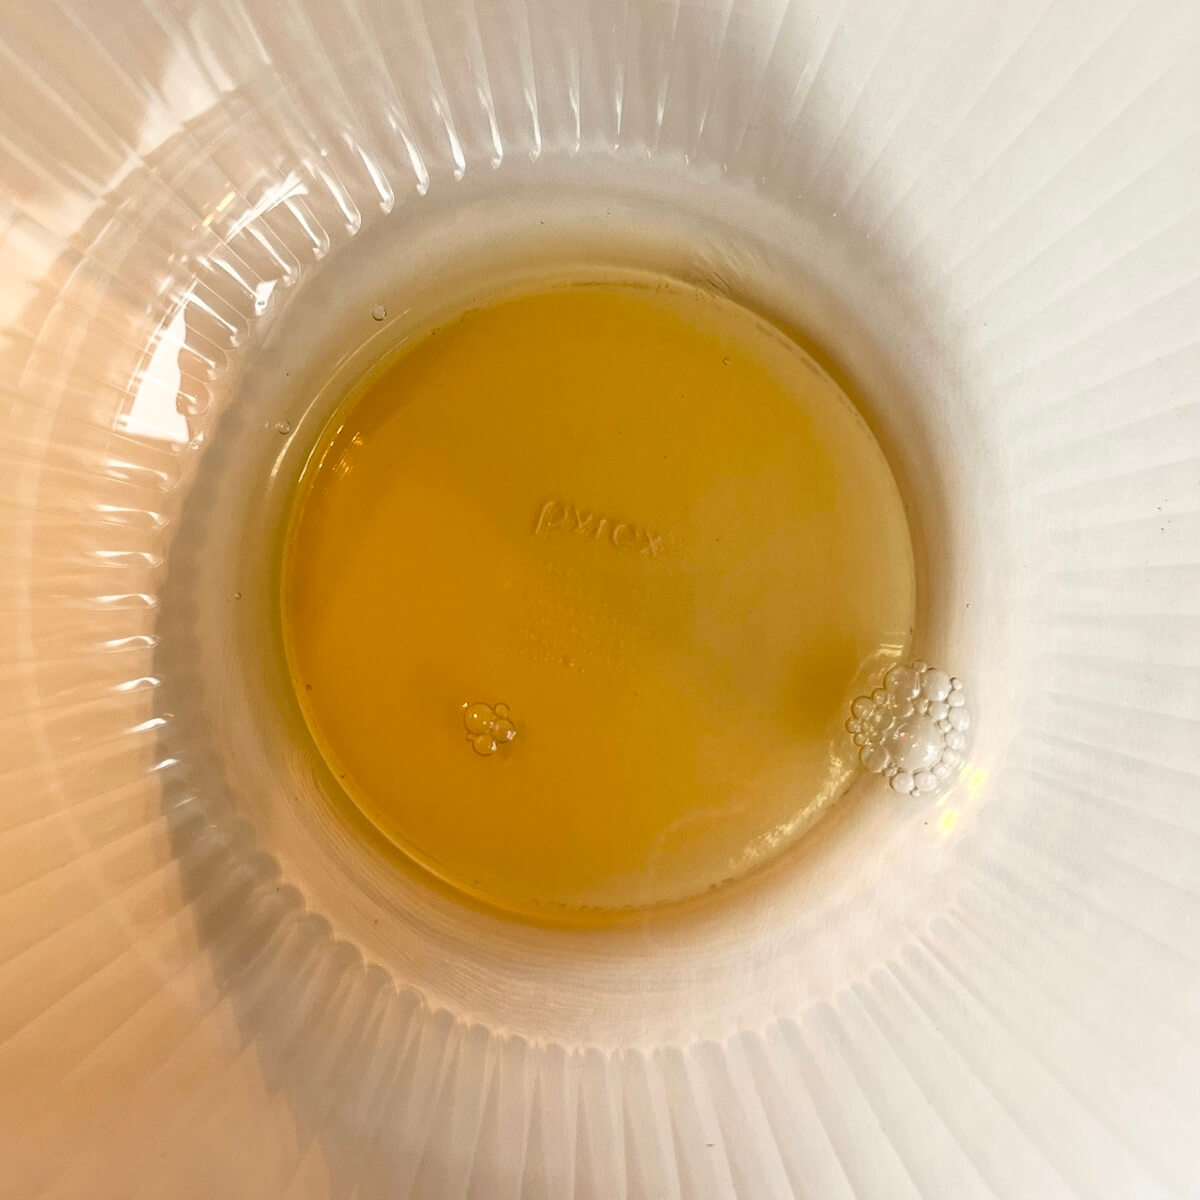 Pale brown transparent liquid in a glass bowl.